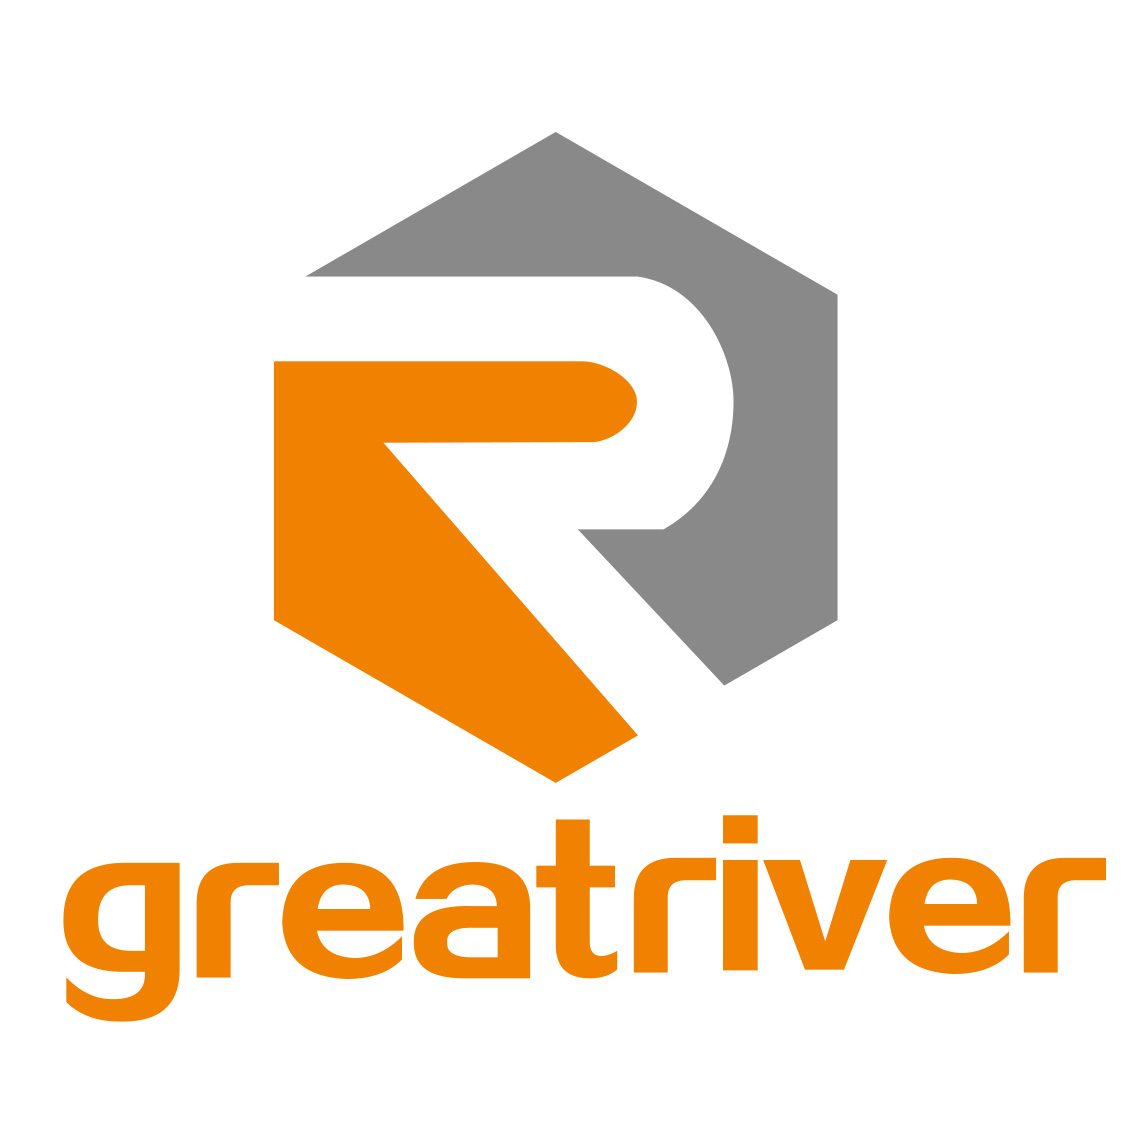 GreatRiver